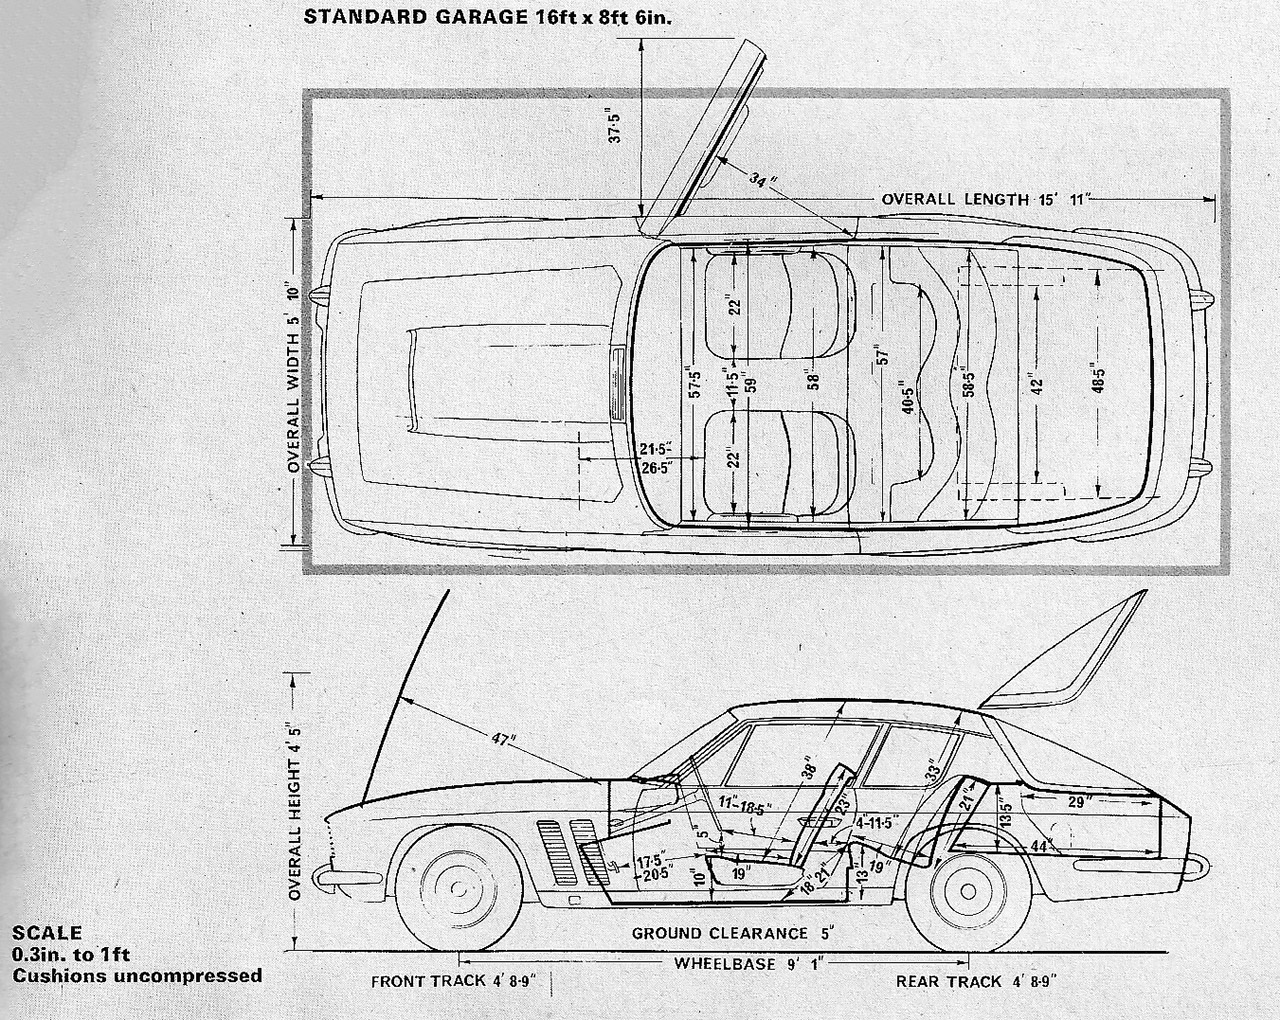 1968 Jensen FF MkI road test